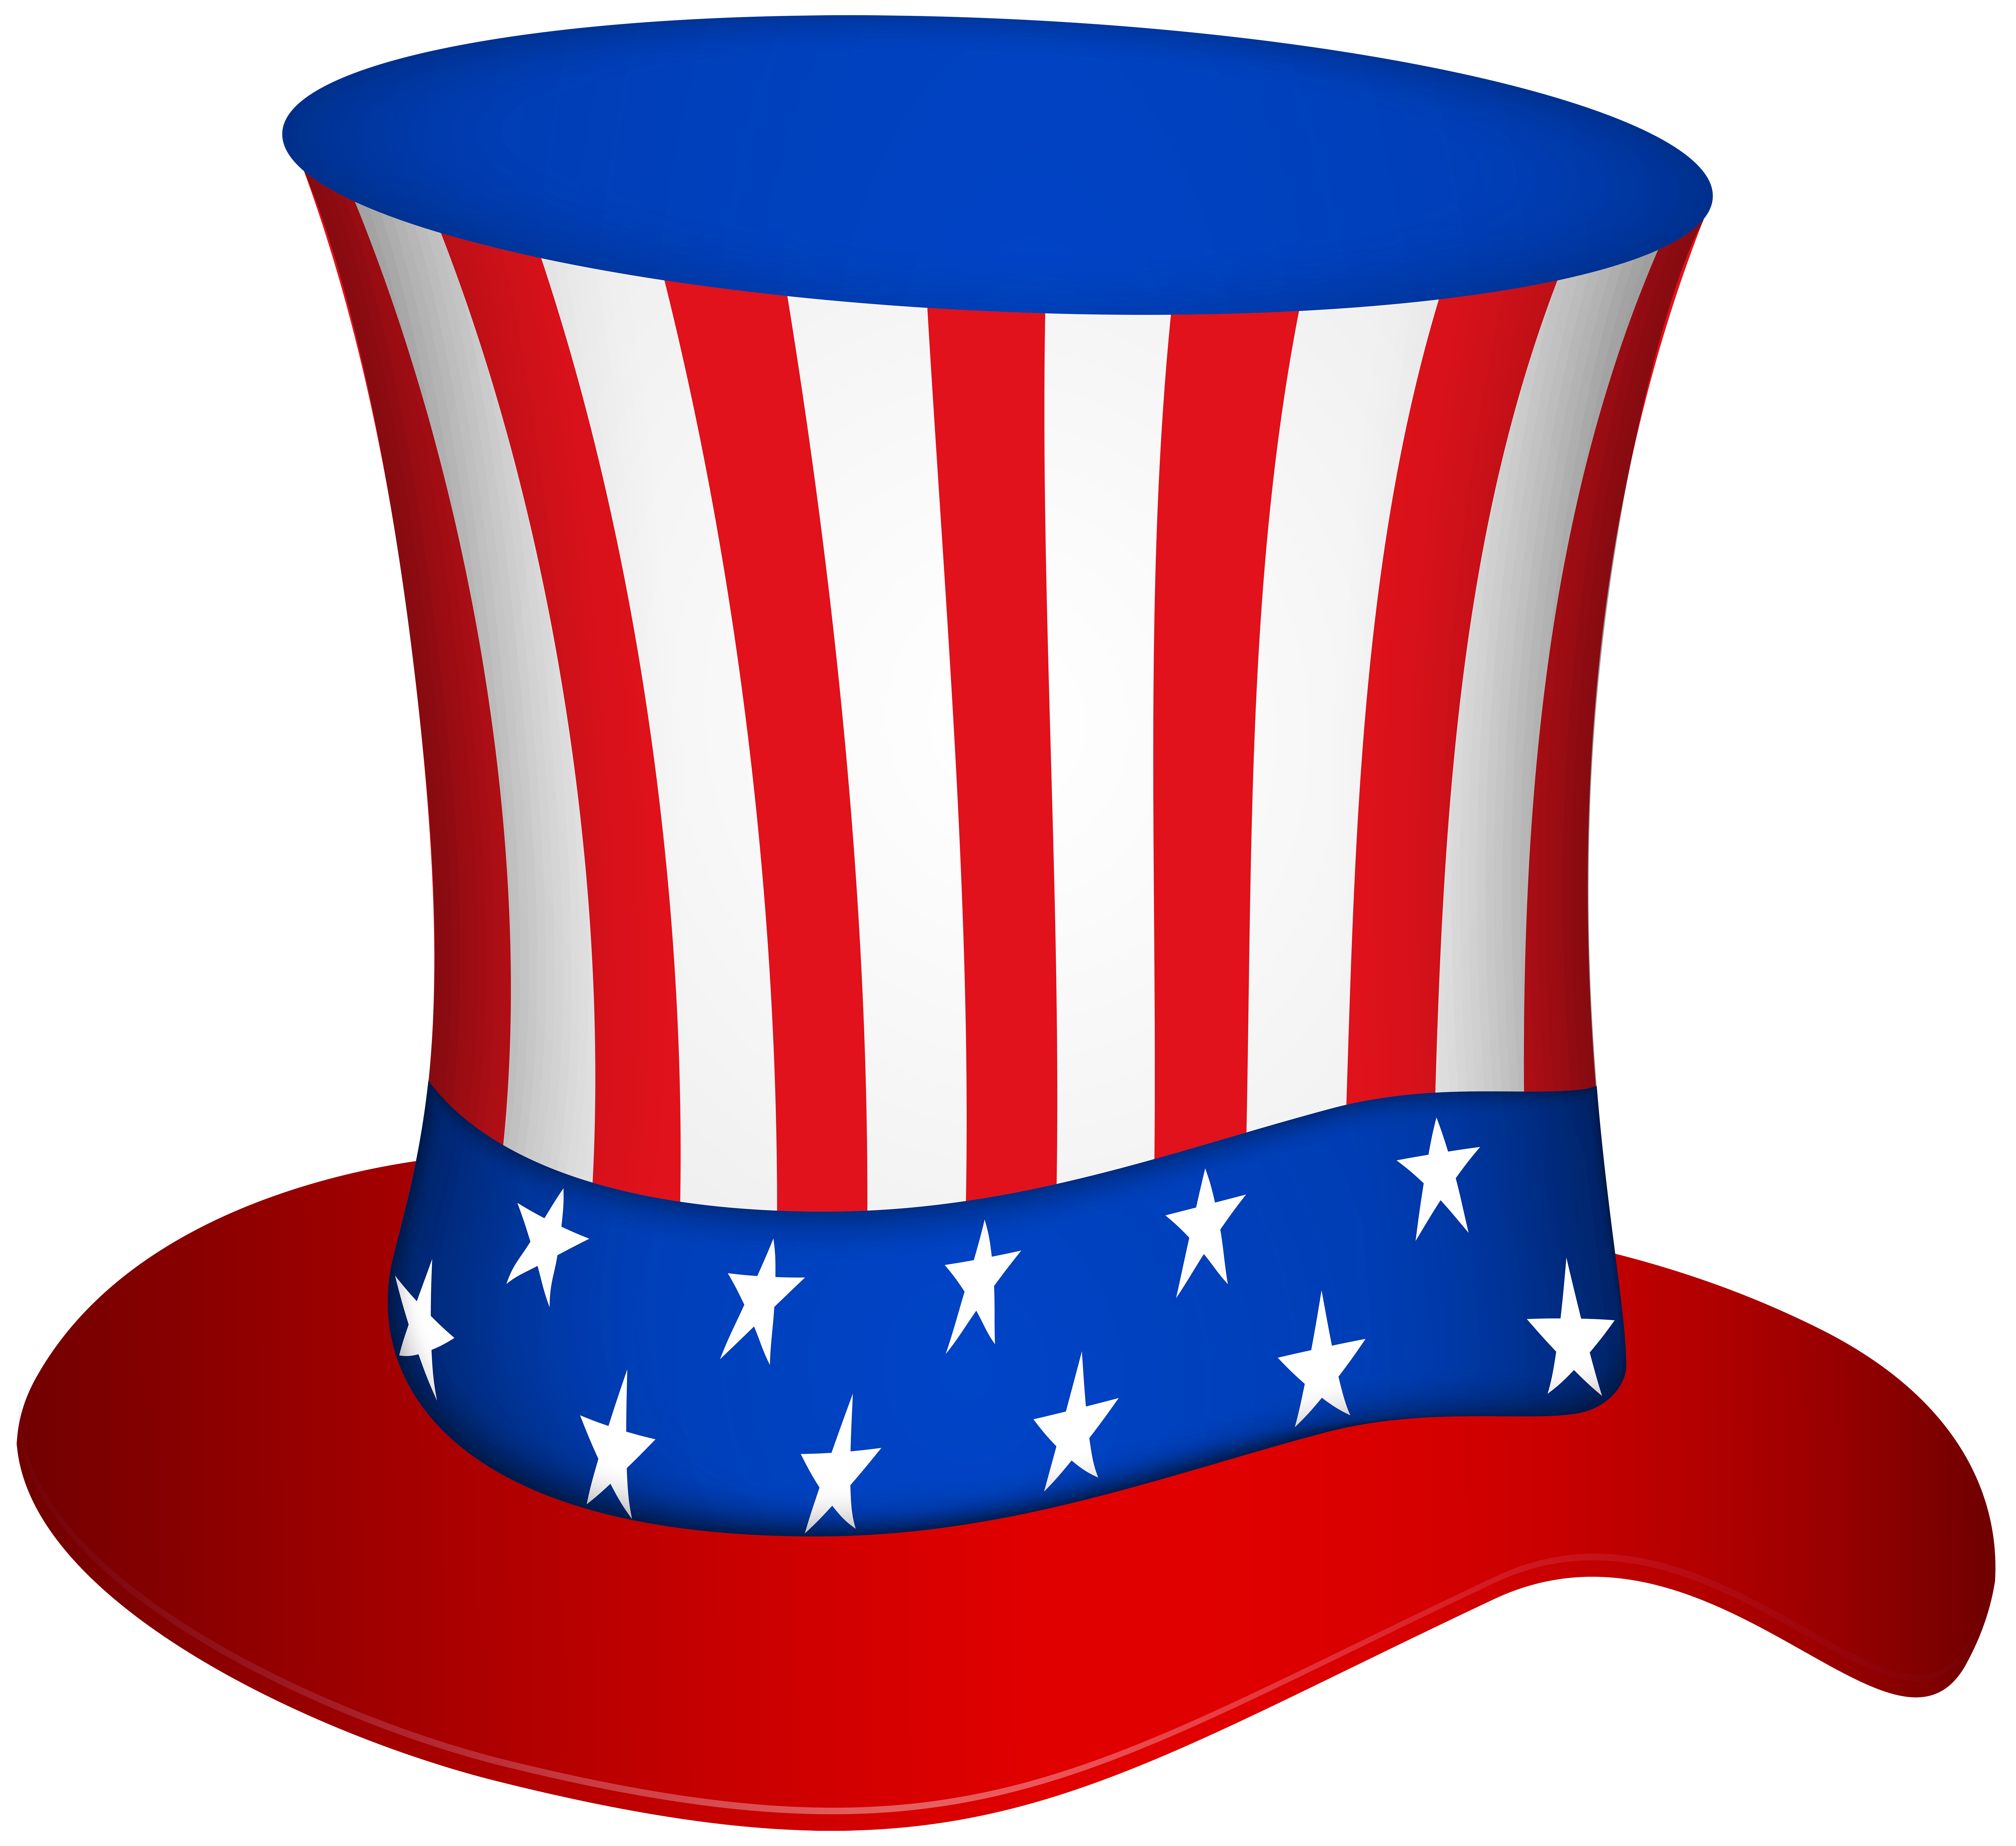 patriotic clipart uncle sam hat